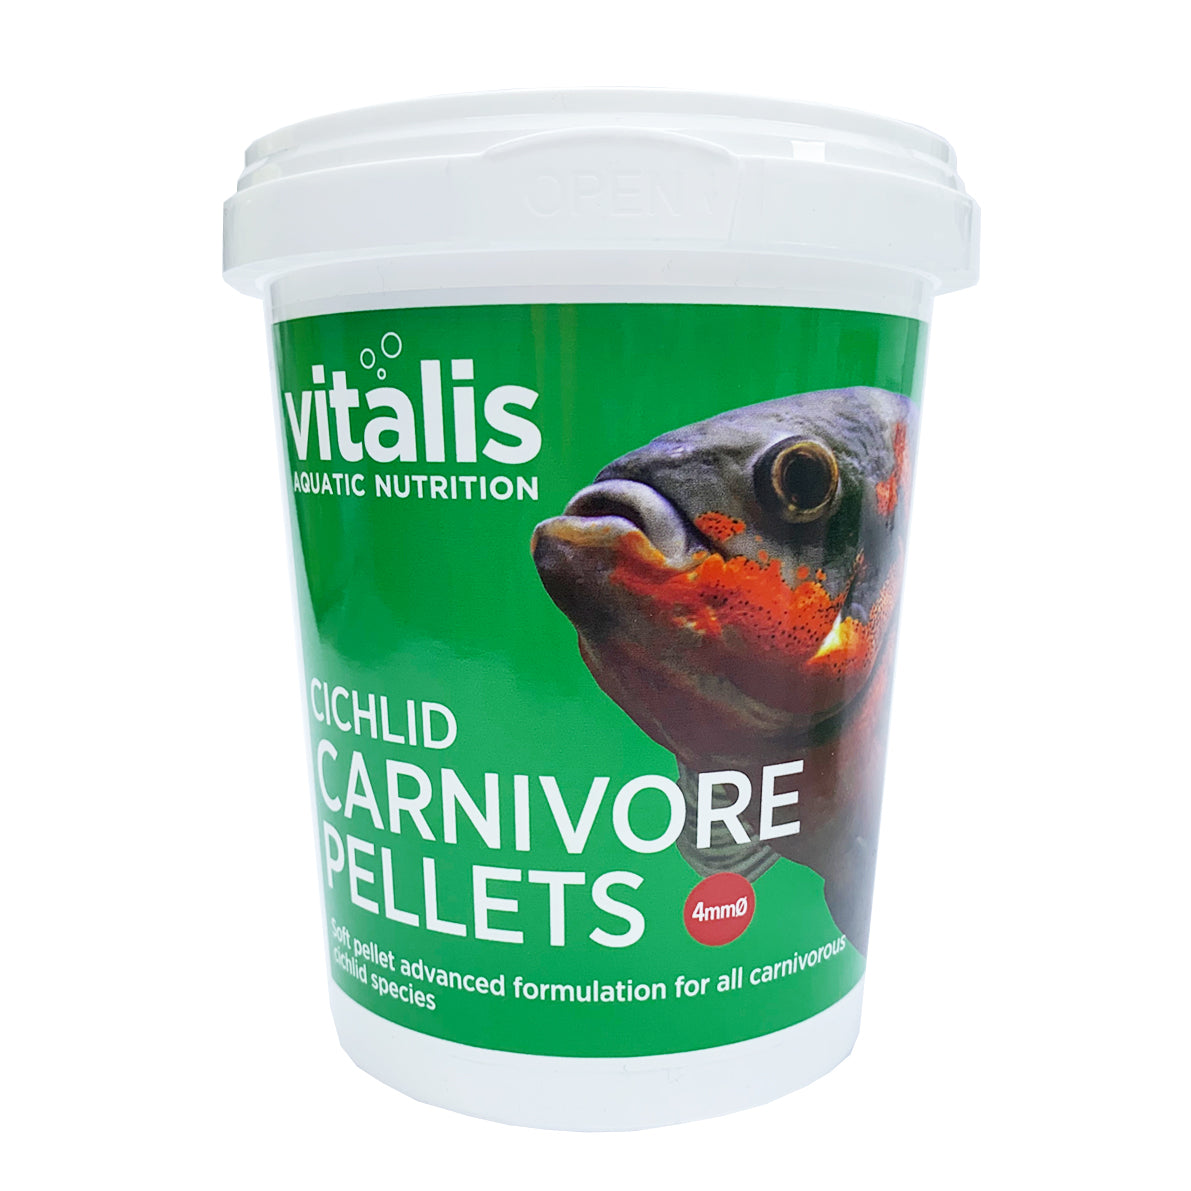 Vitalis Cichlid Carnivore Pellets - 4mm Pellets | Fish Food from Aquacadabra